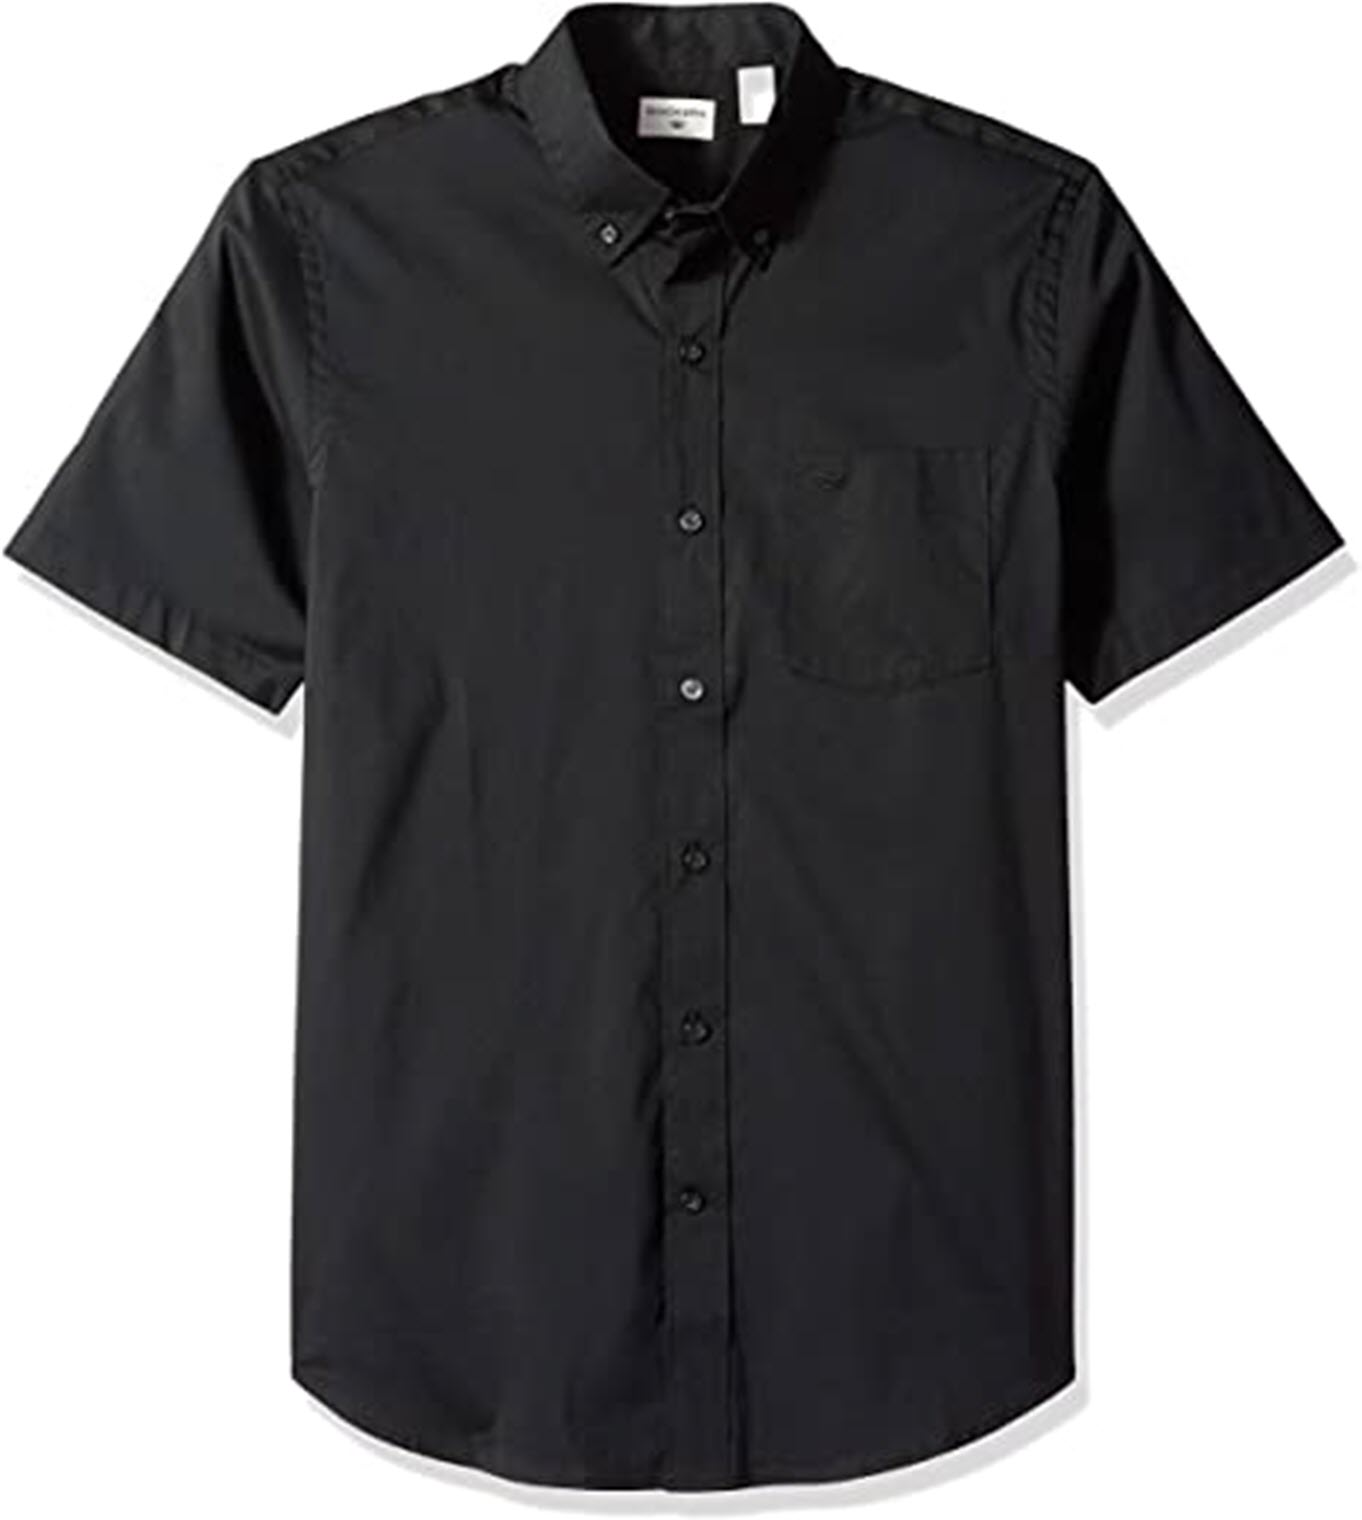 Dockers Men's Short Sleeve Button Down Comfort Flex Shirt, Black, Large ...